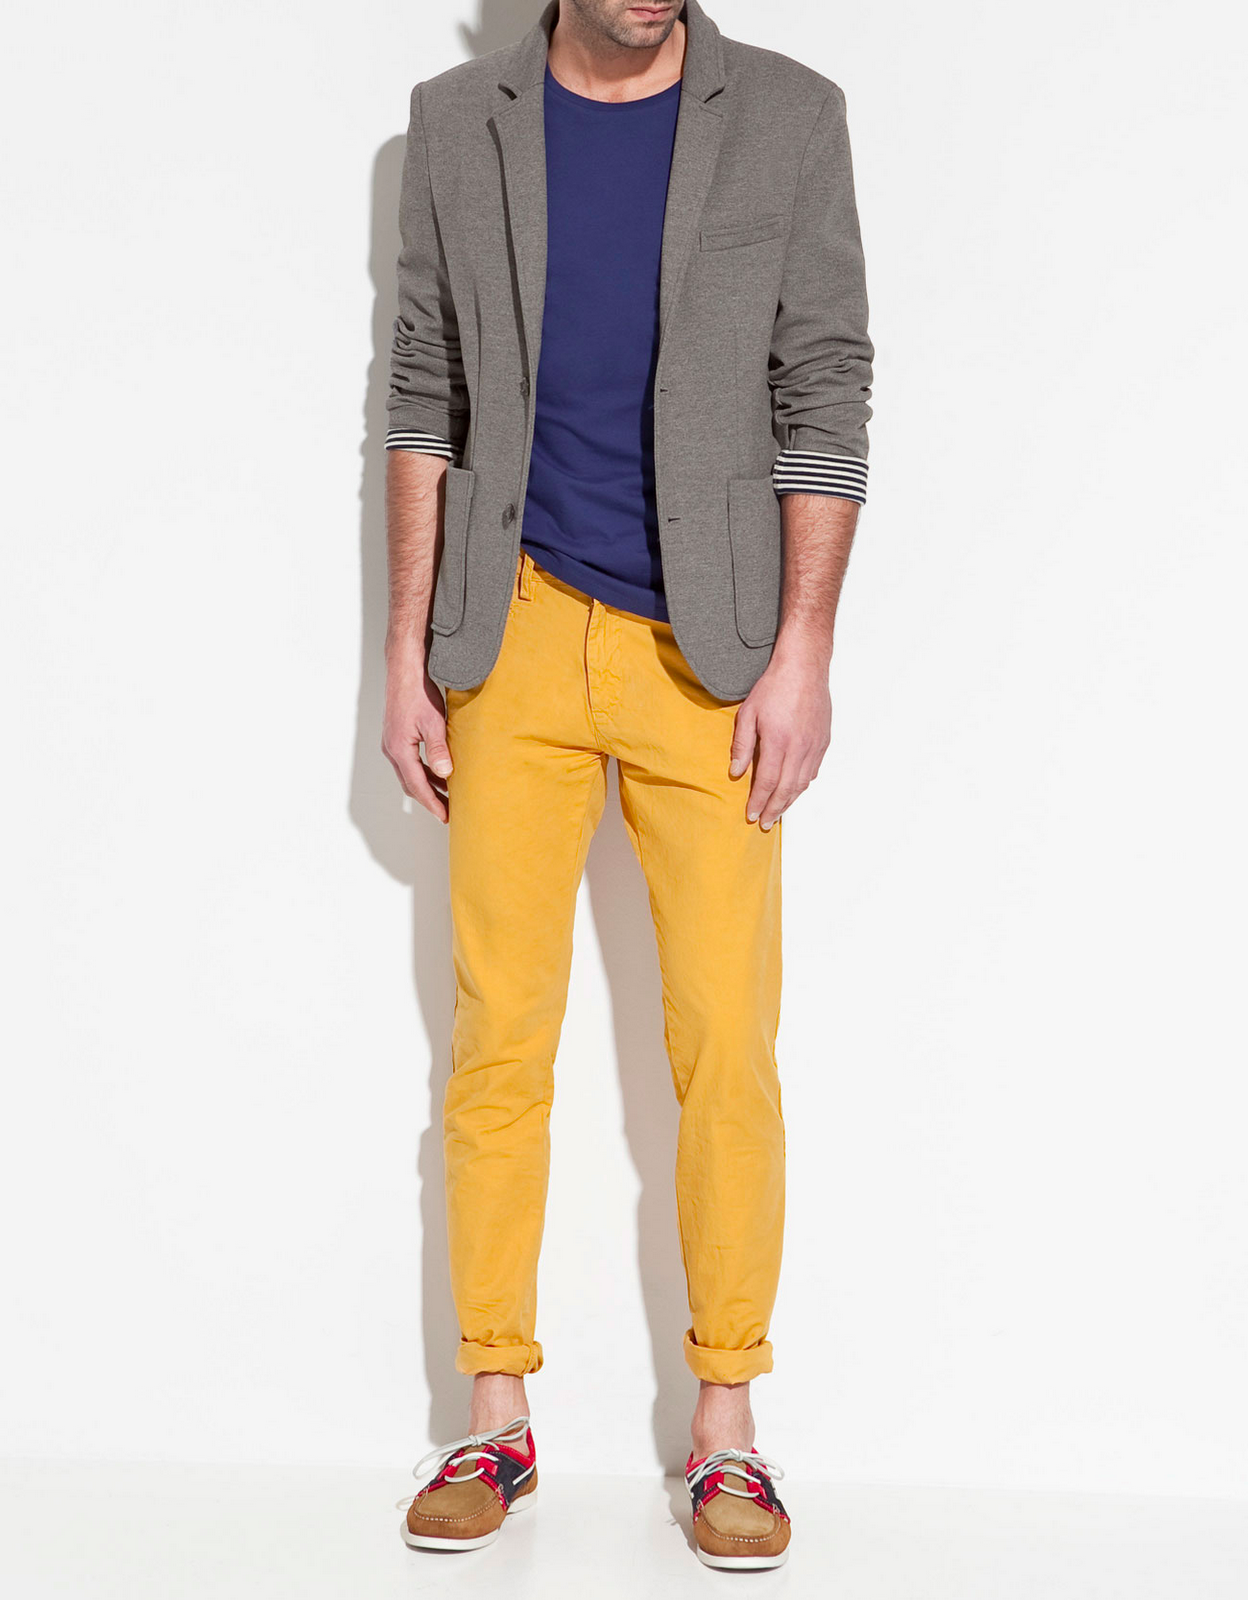 Желтые штаны мужские. Желтые брюки мужские. Горчичные брюки мужские. Образ с горчичными брюками. Горчичный пиджак мужской.